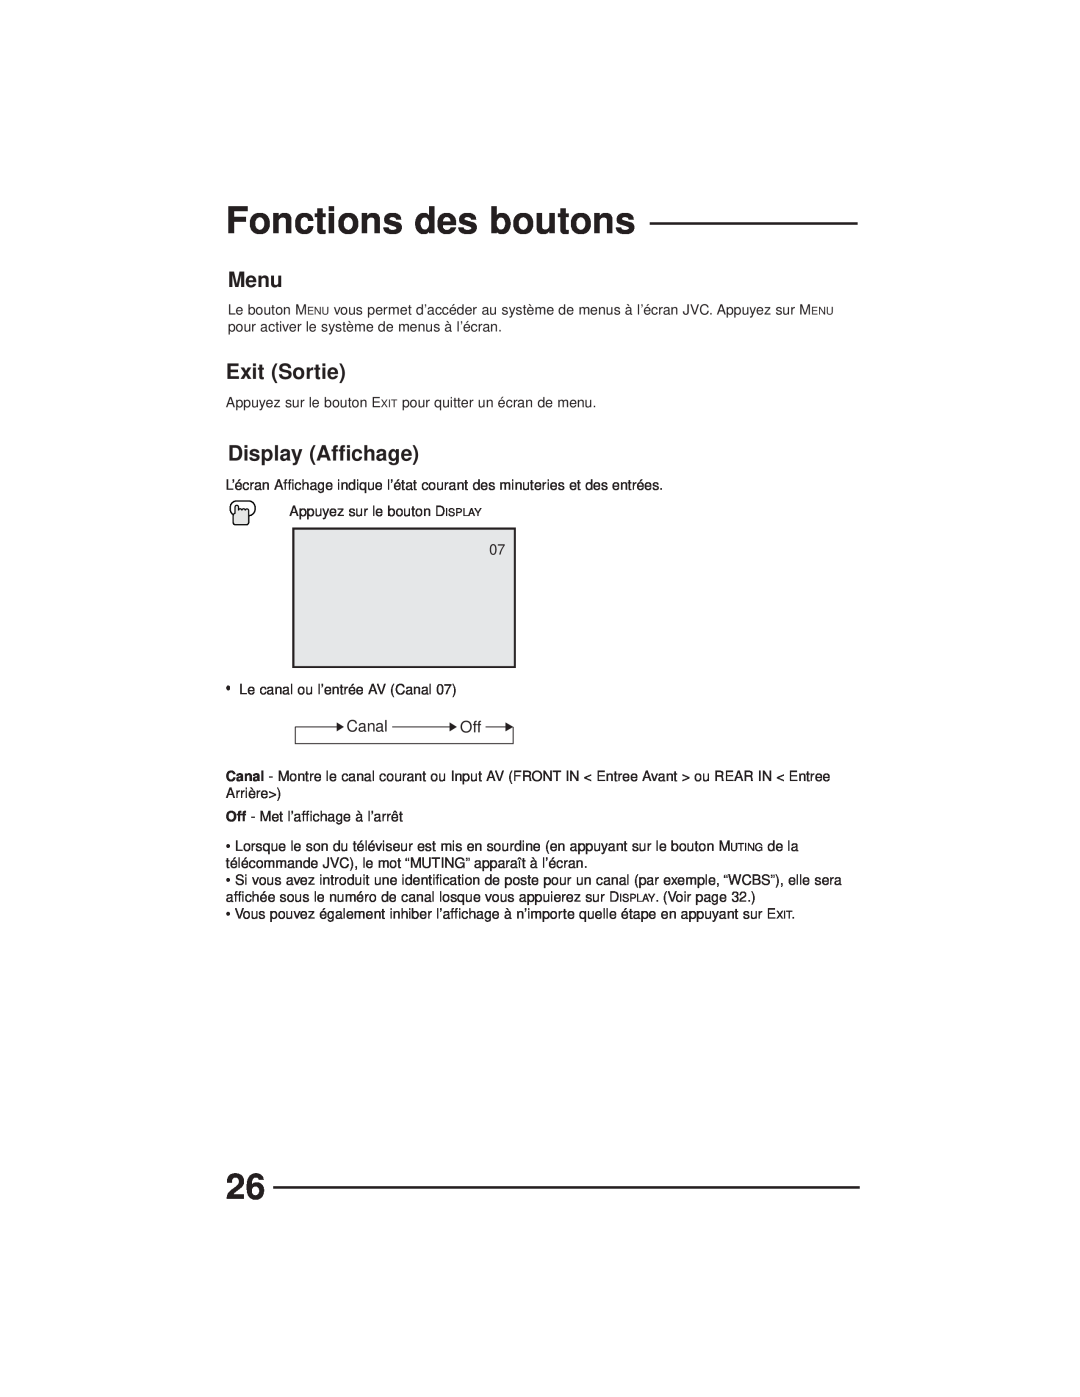 JVC AV-27GFH manual Fonctions des boutons, Exit Sortie, Display Affichage, Menu, Canal Off 